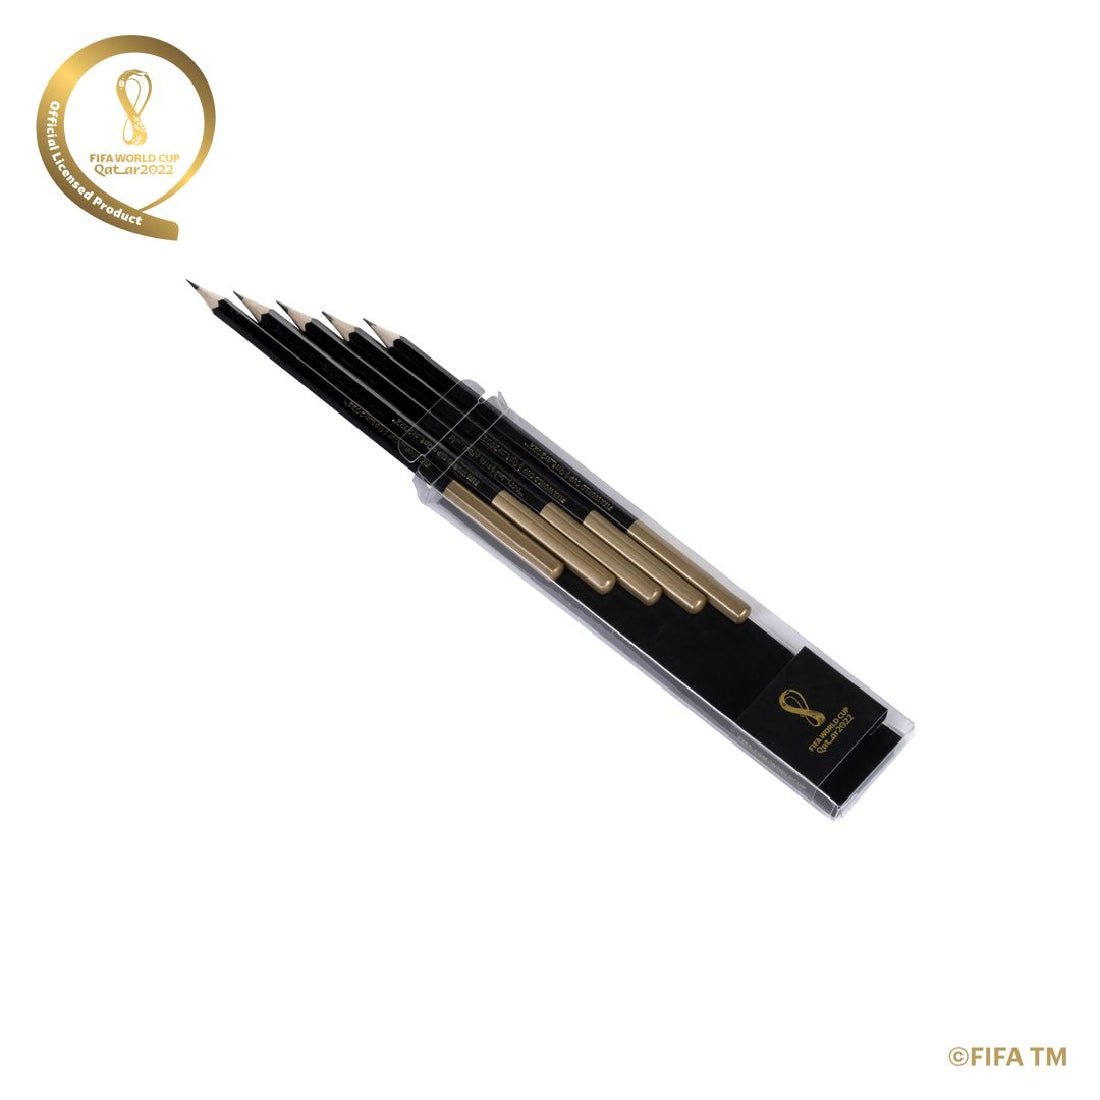 Qlive Premium Black Pencils - FIFA World Cup Qatar 2022 - أكسسوار كأس العالم قطر 2022 - Store 974 | ستور ٩٧٤